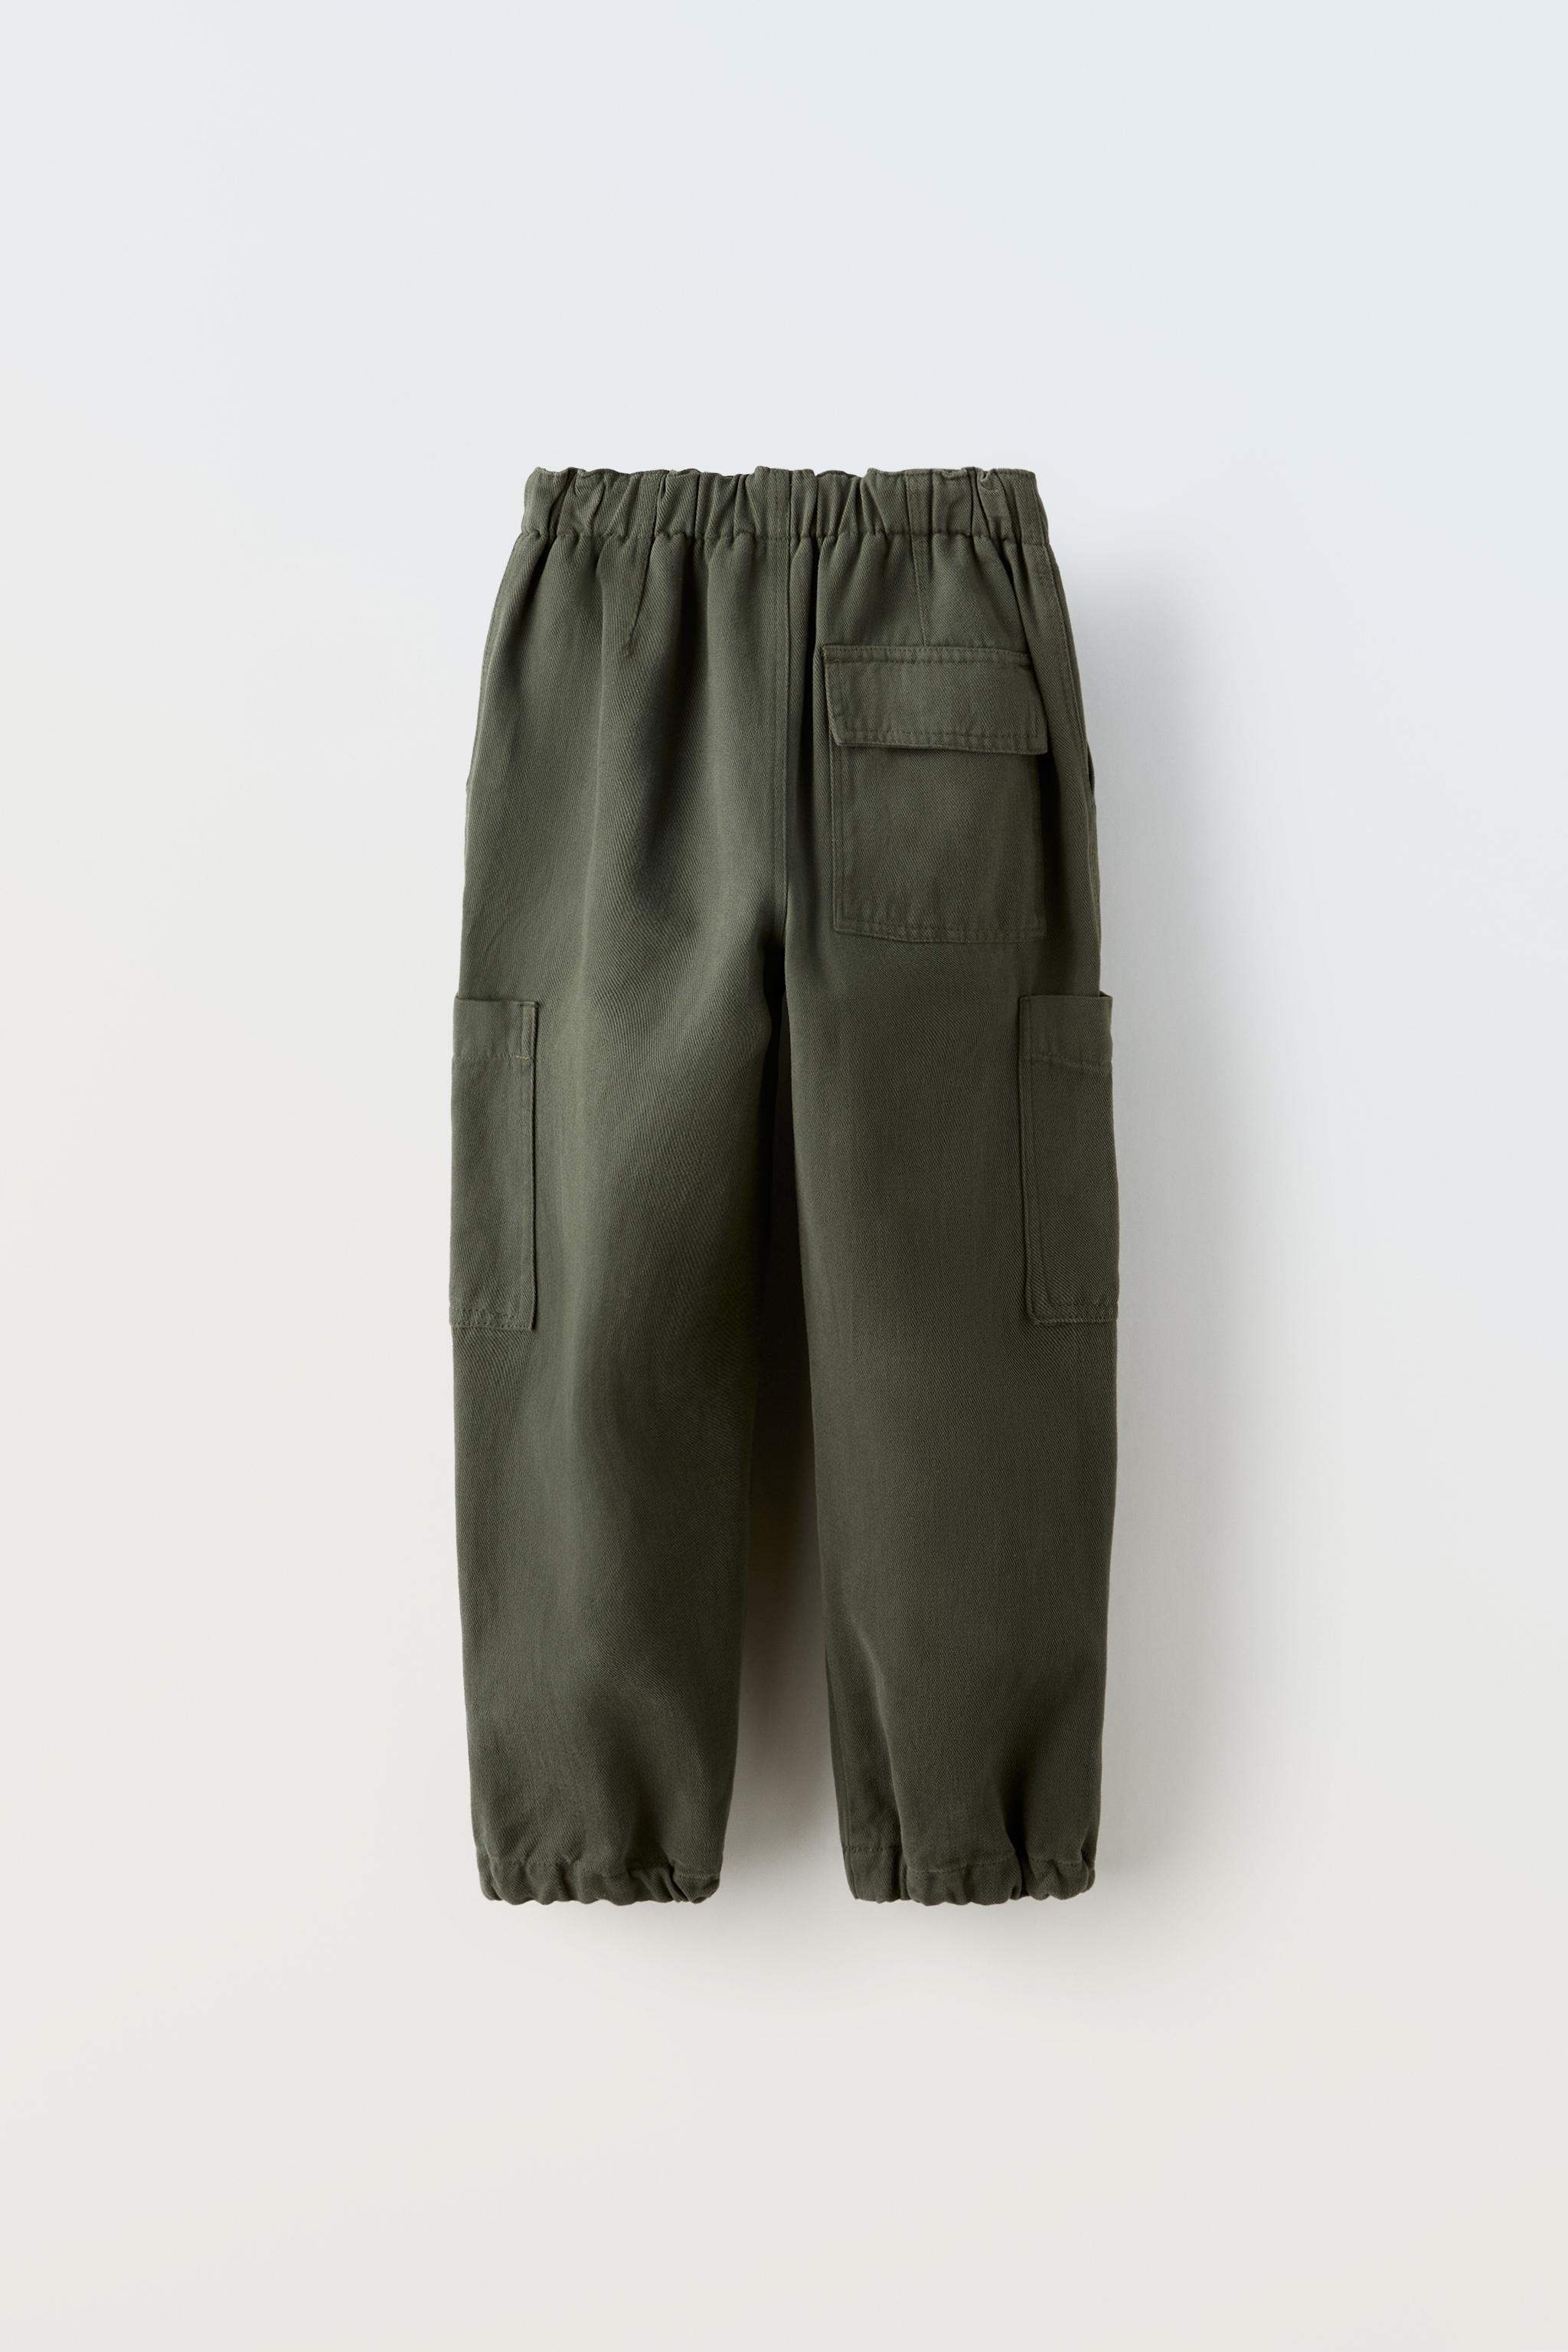 Zara Olive Green Cargo Pants Size 2